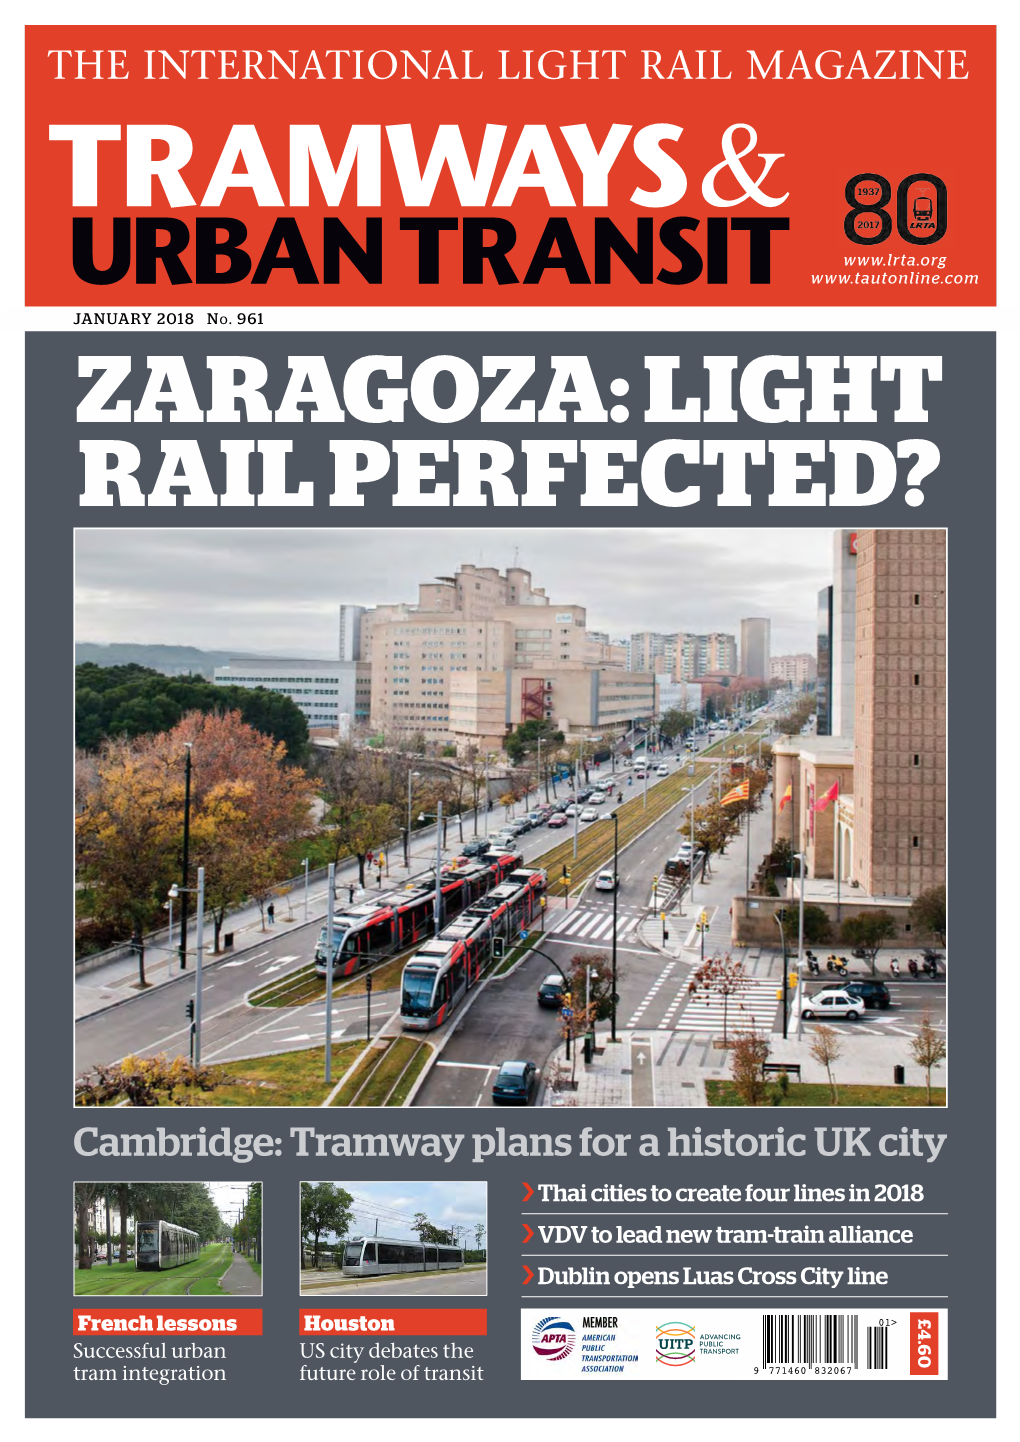 Zaragoza: Light Rail Perfected?